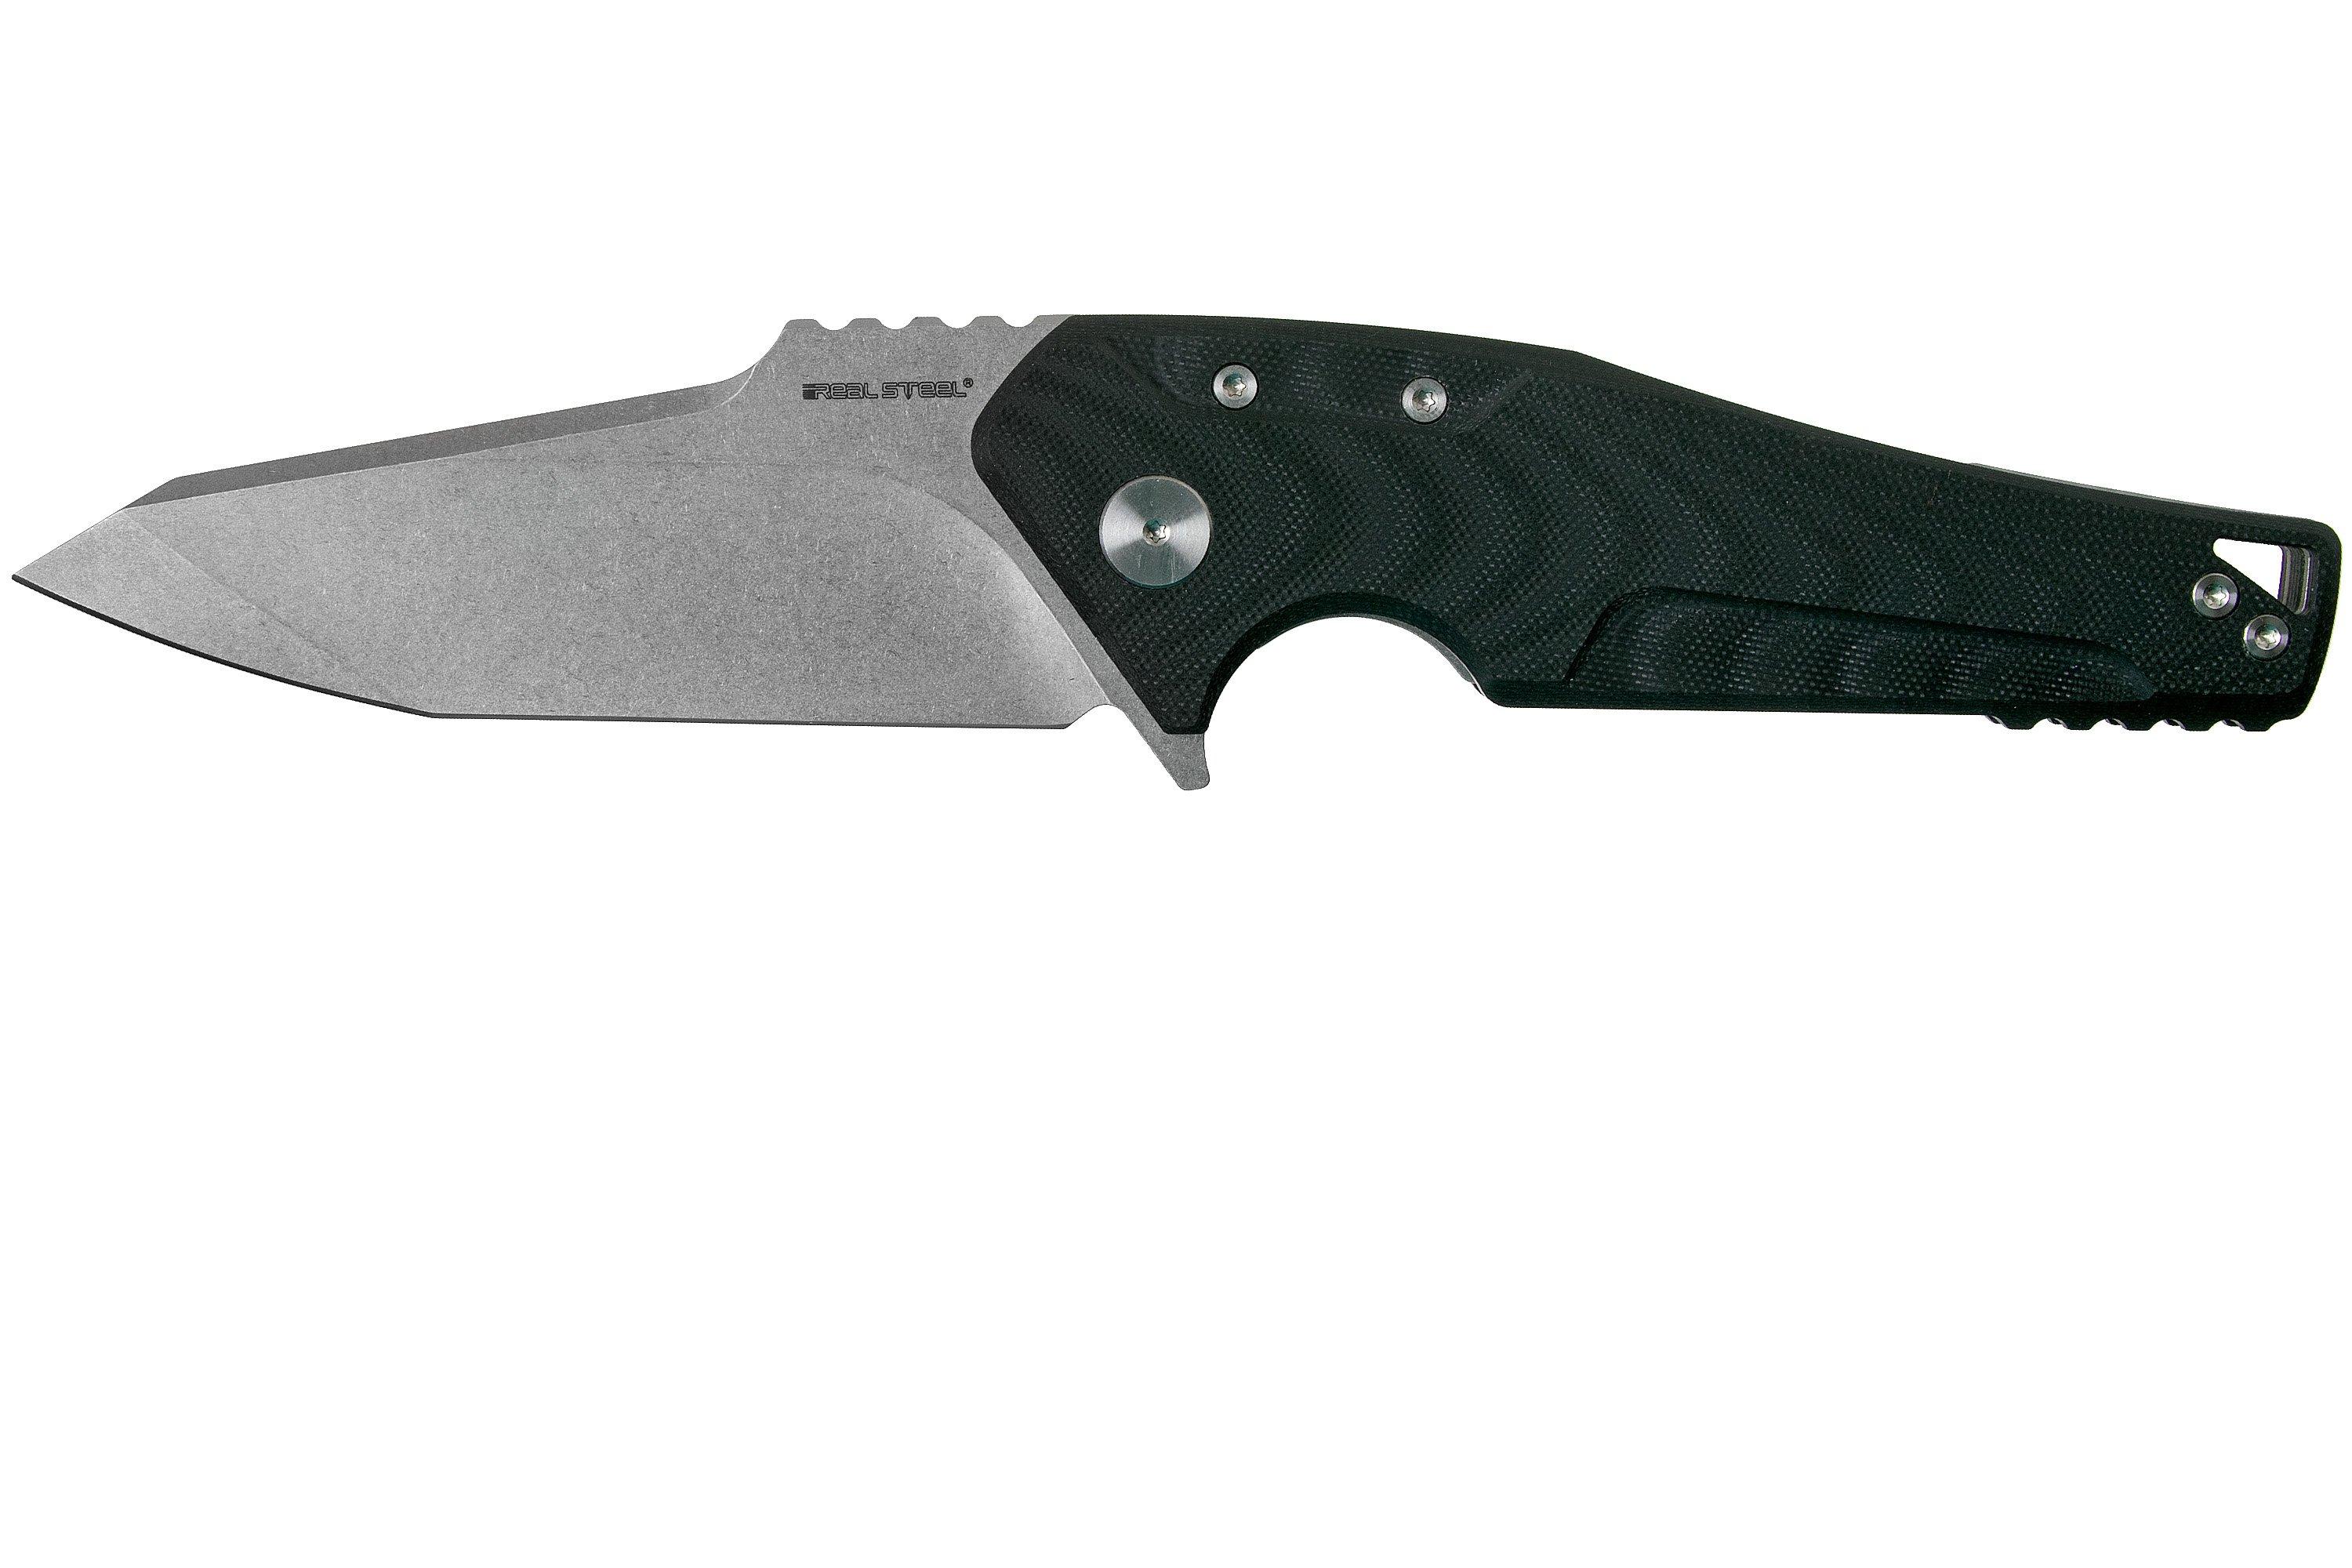 Real Steel Echo 9841 pocket knife, Torbe design | Advantageously ...